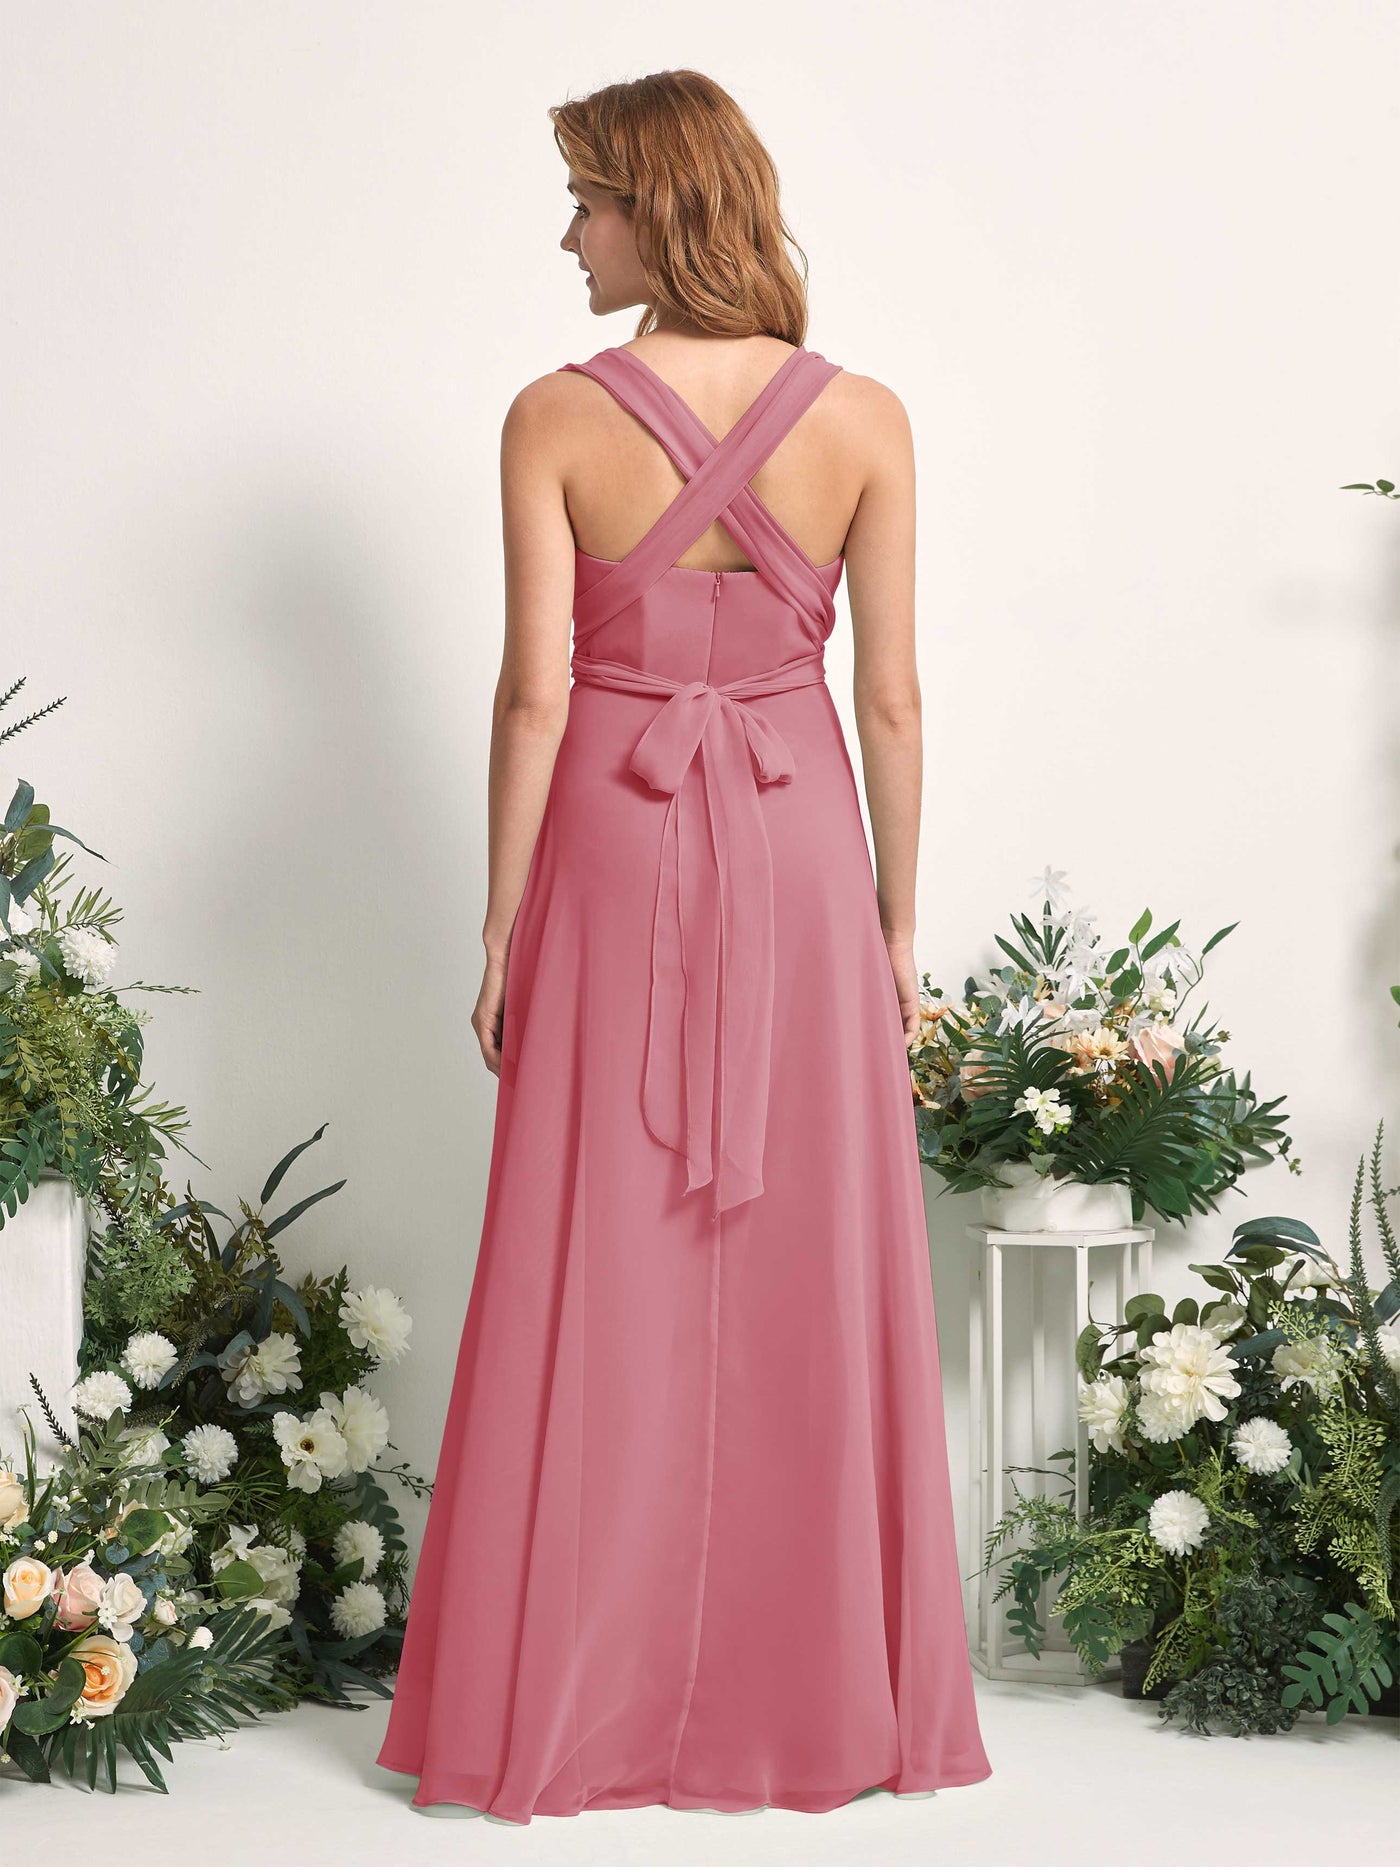 Desert Rose Bridesmaid Dresses Bridesmaid Dress A-line Chiffon Halter Full Length Short Sleeves Wedding Party Dress (81226311)#color_desert-rose